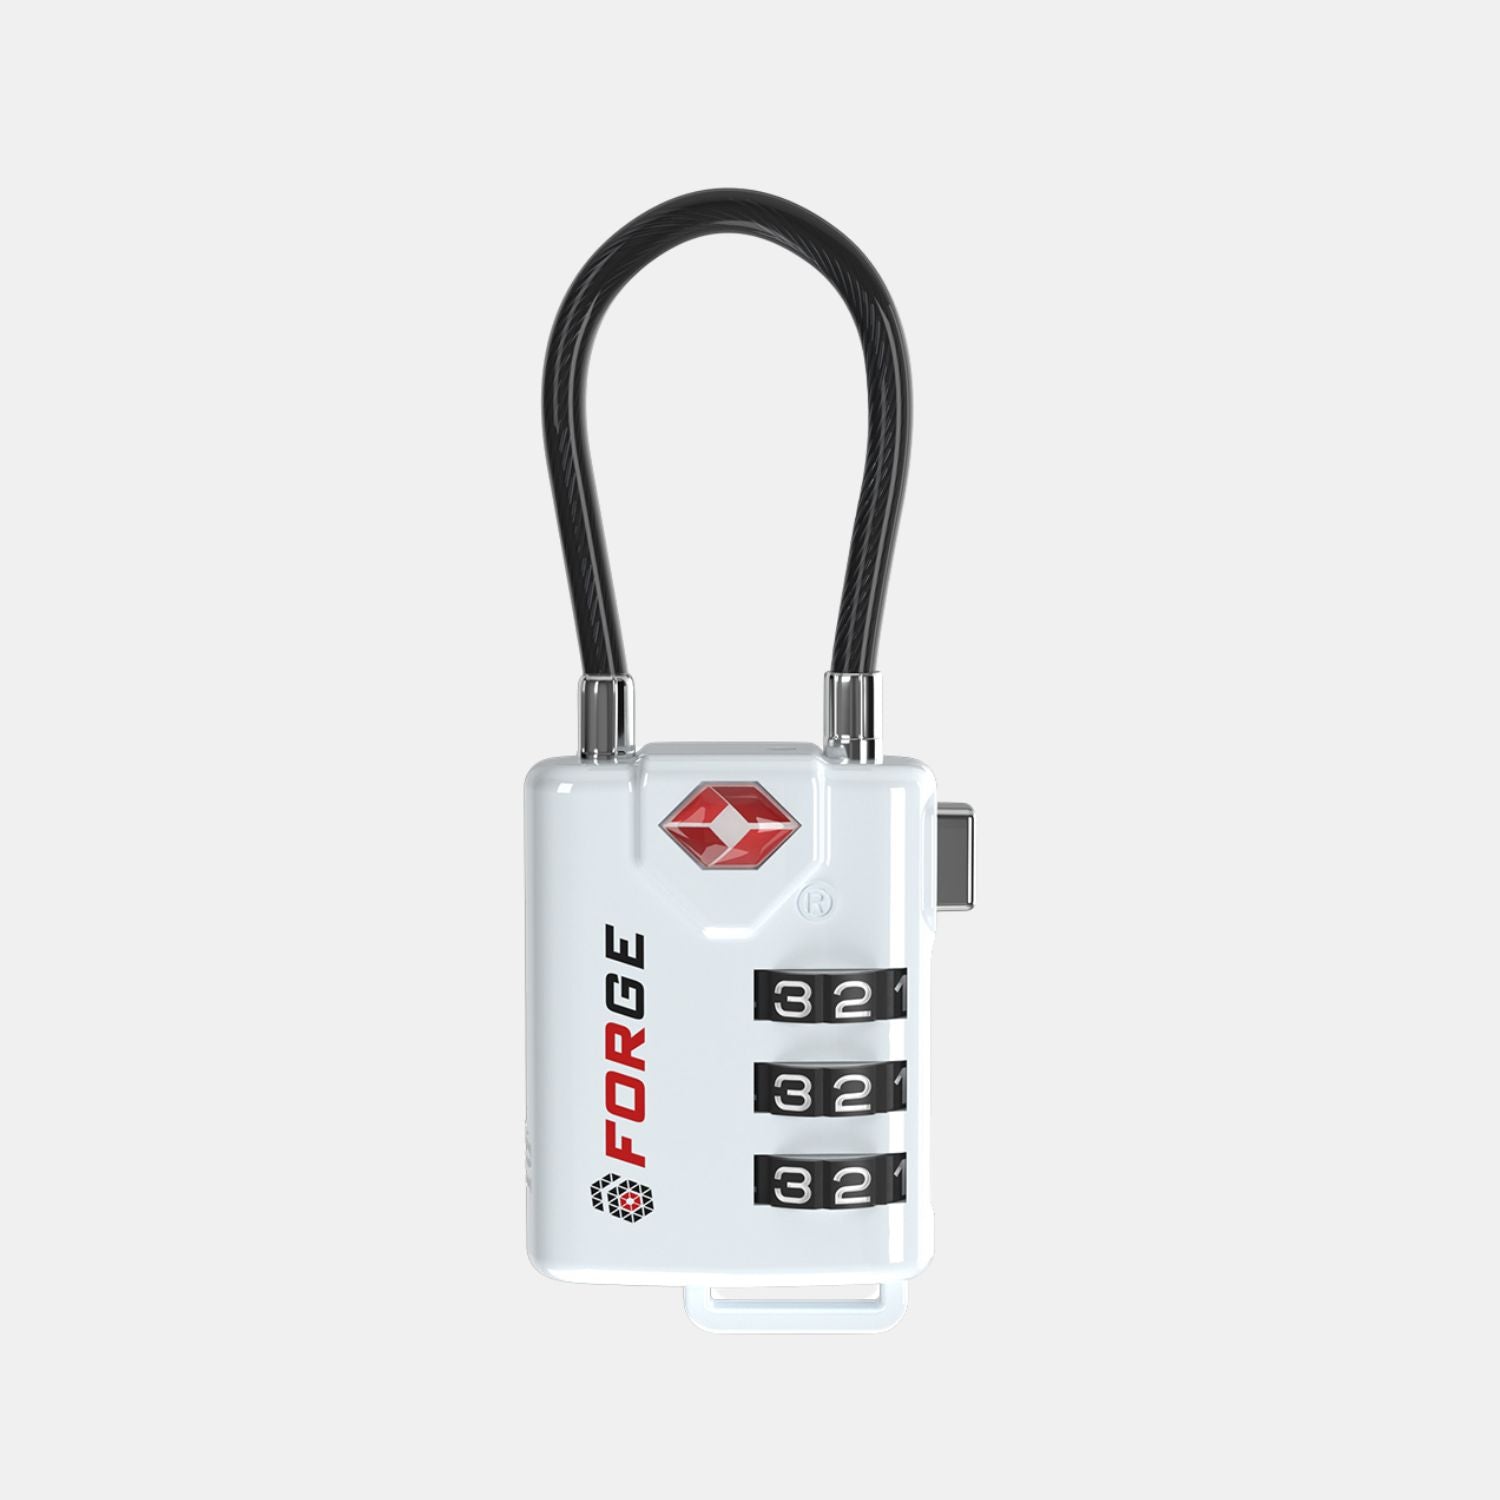 Forge Tsa Lock 4 Pack - Open Alert Indicator, Easy Read Dials